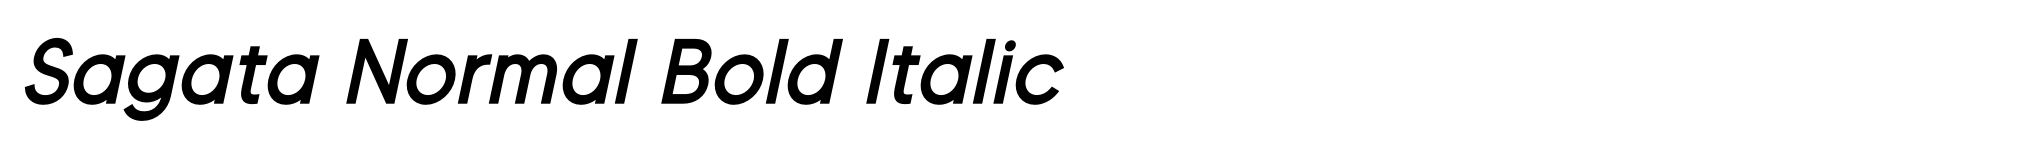 Sagata Normal Bold Italic image